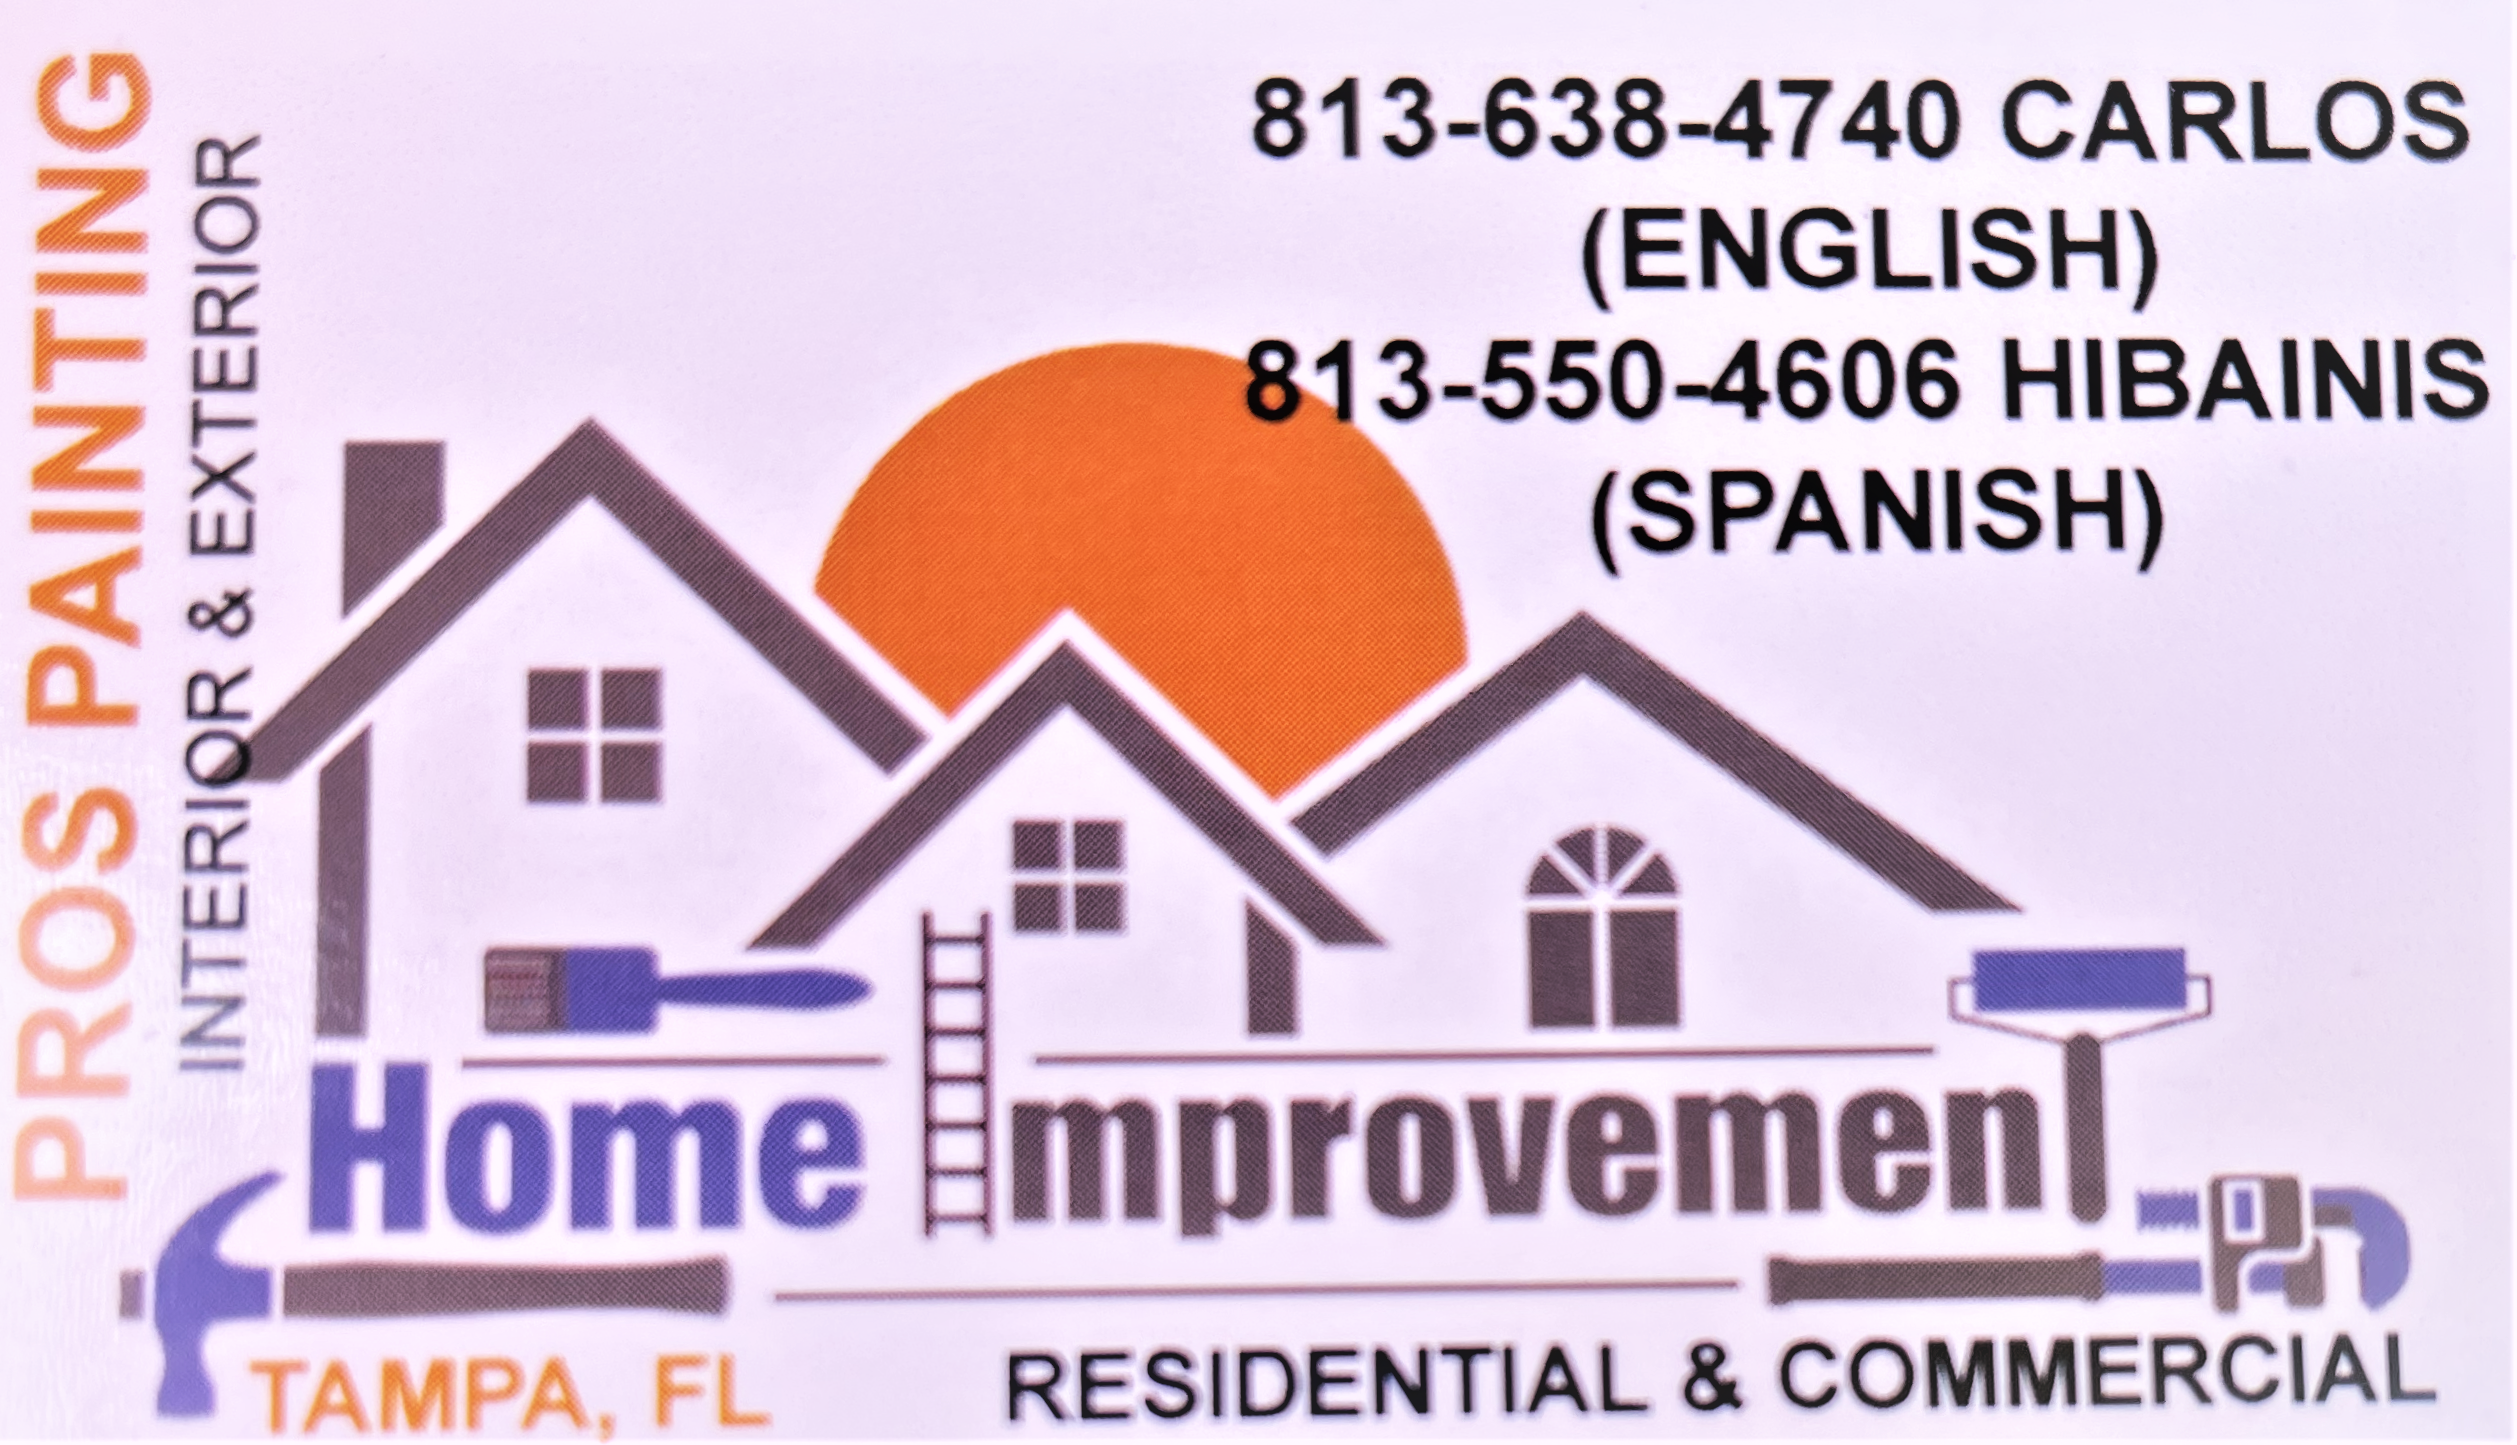 Pros Painting Home Improvement Logo